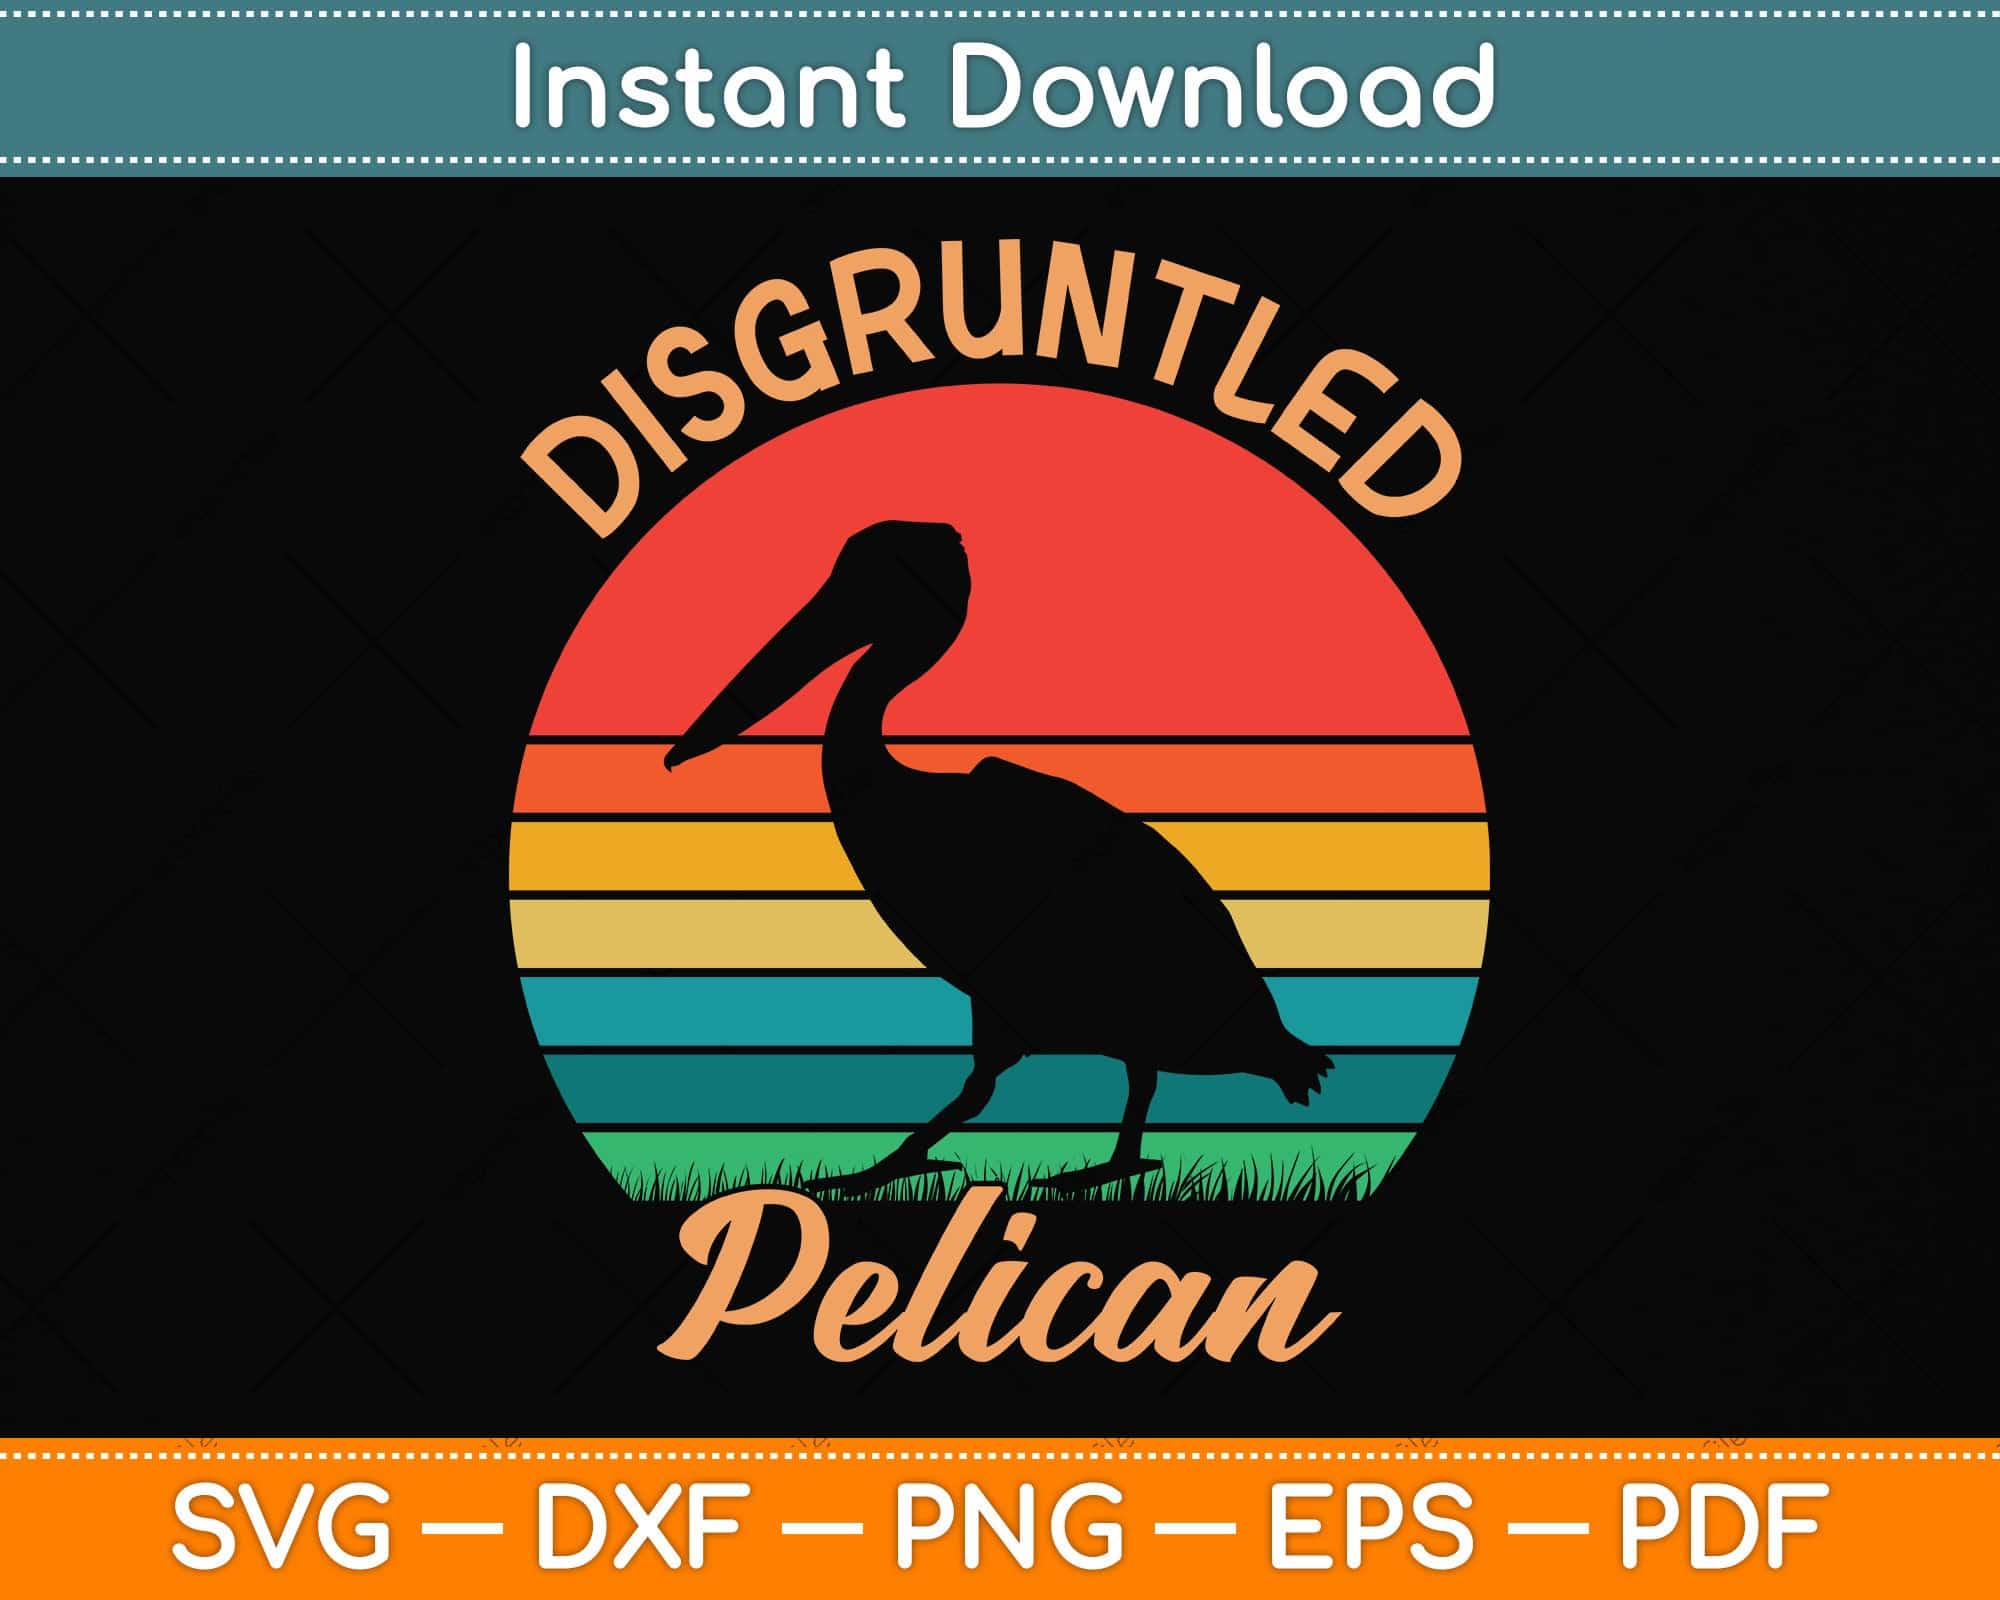 Disgruntled Pelican Mug